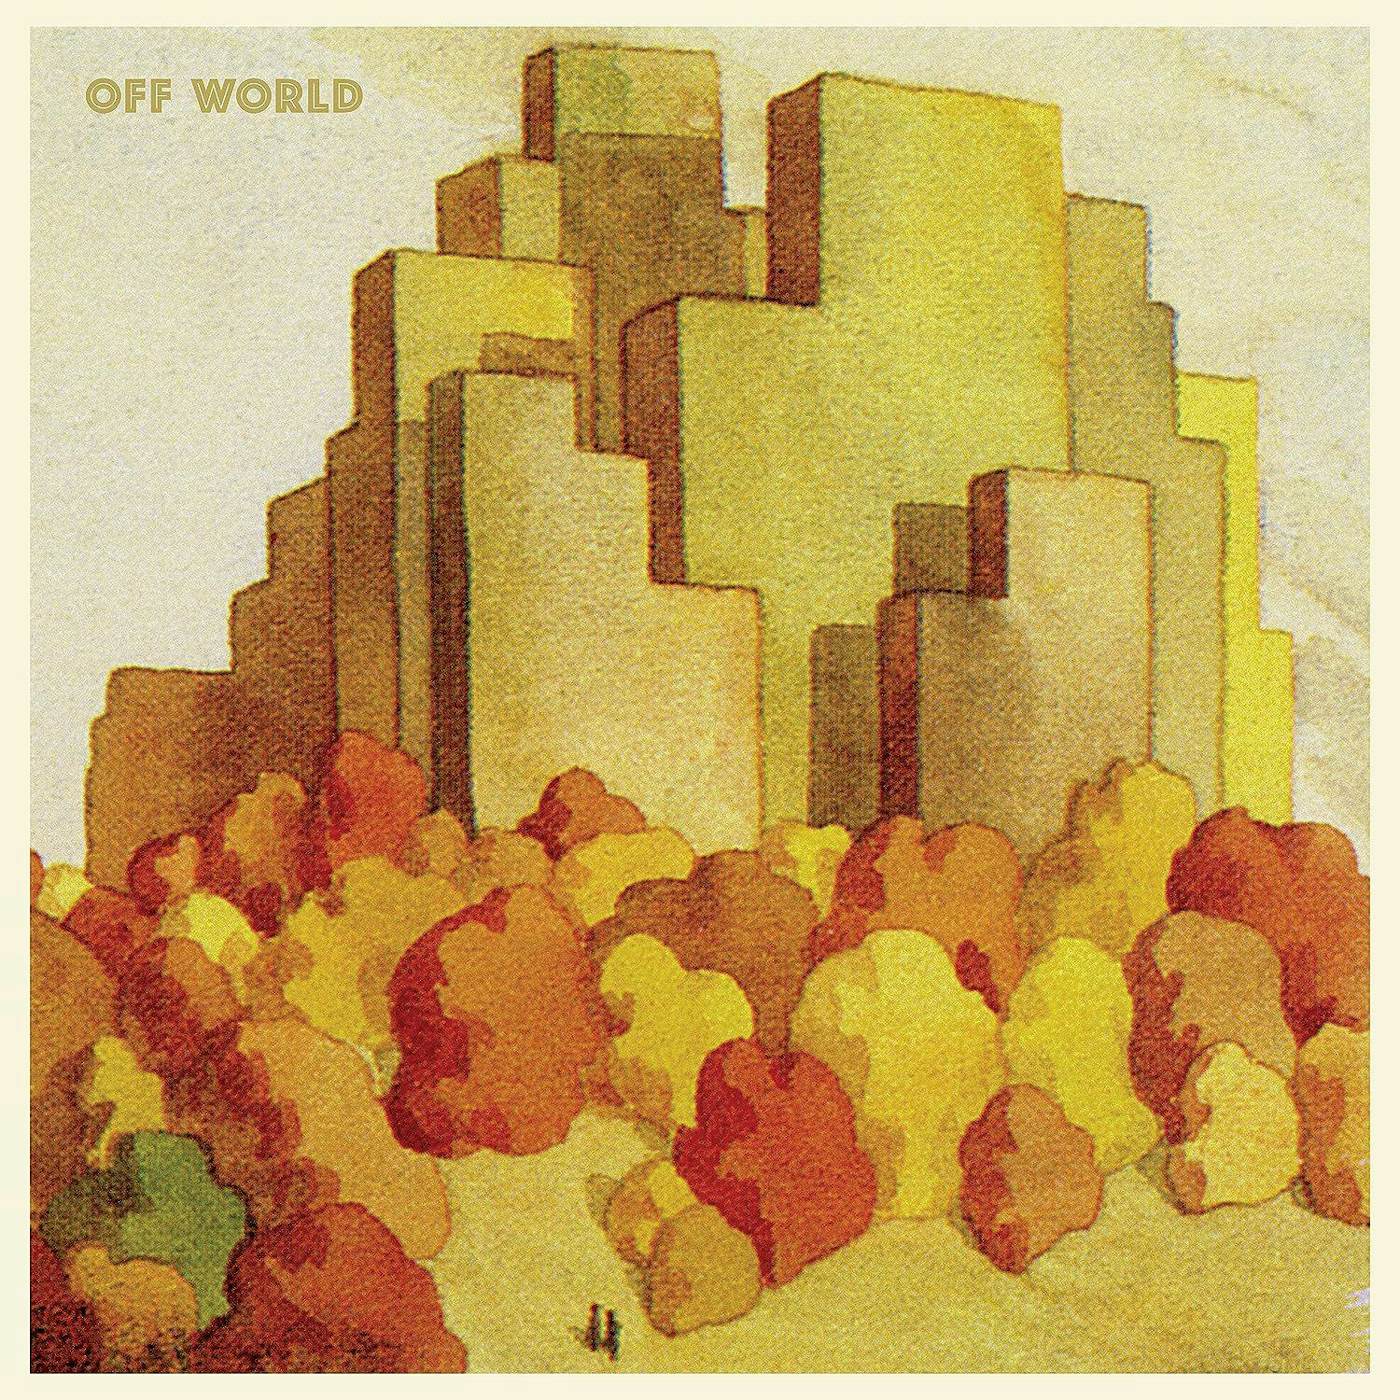 Off World 3 Vinyl Record